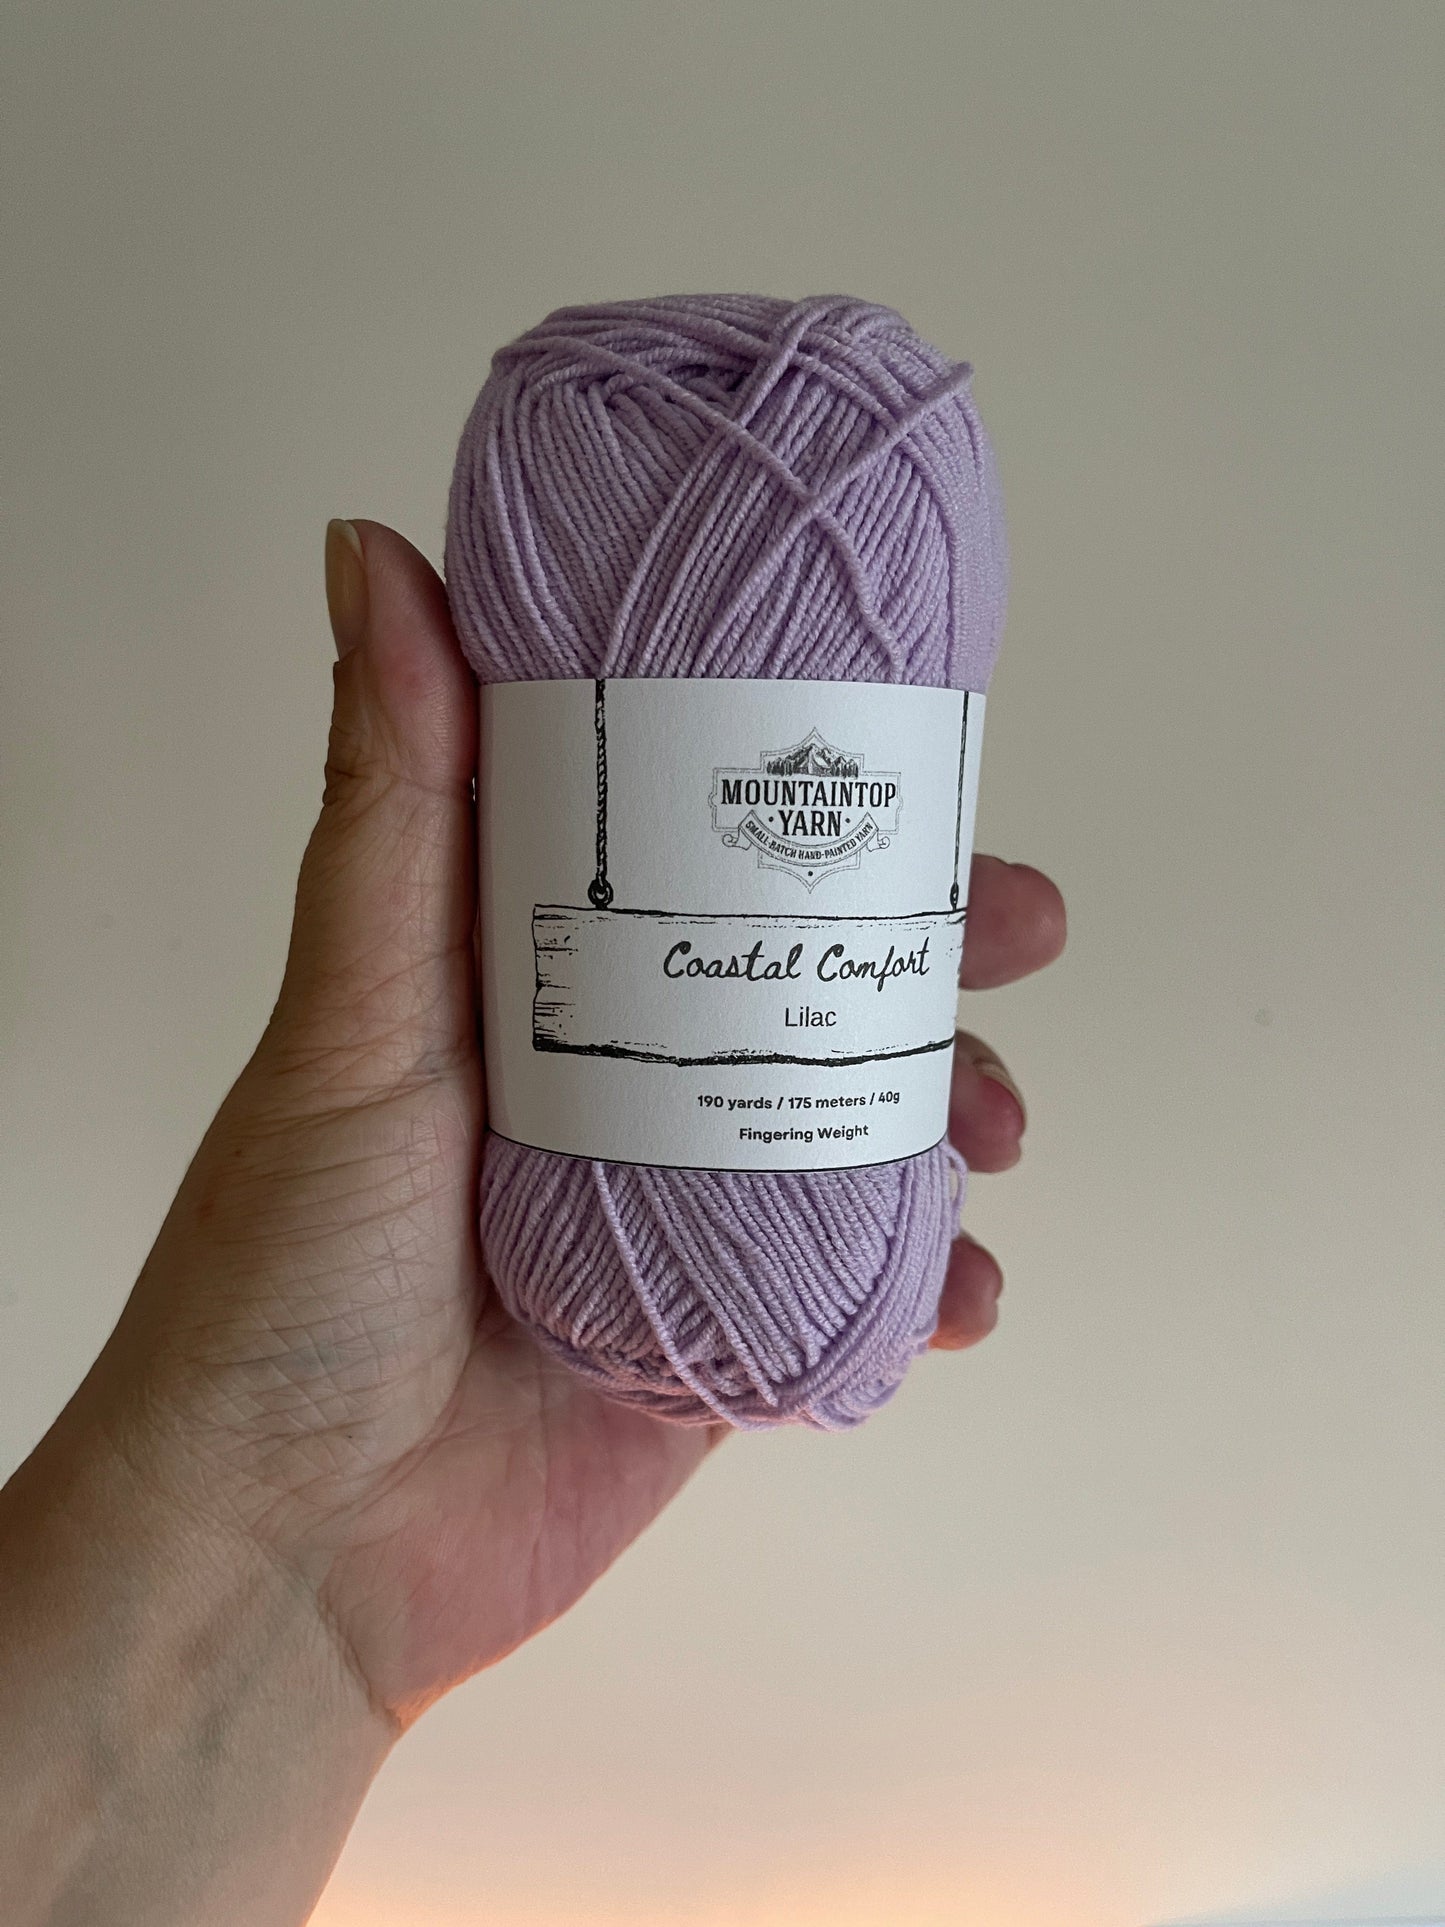 Mountaintop Yarn Lilac Coastal Comfort - Cotton and Acrylic Blend Yarn Yarn